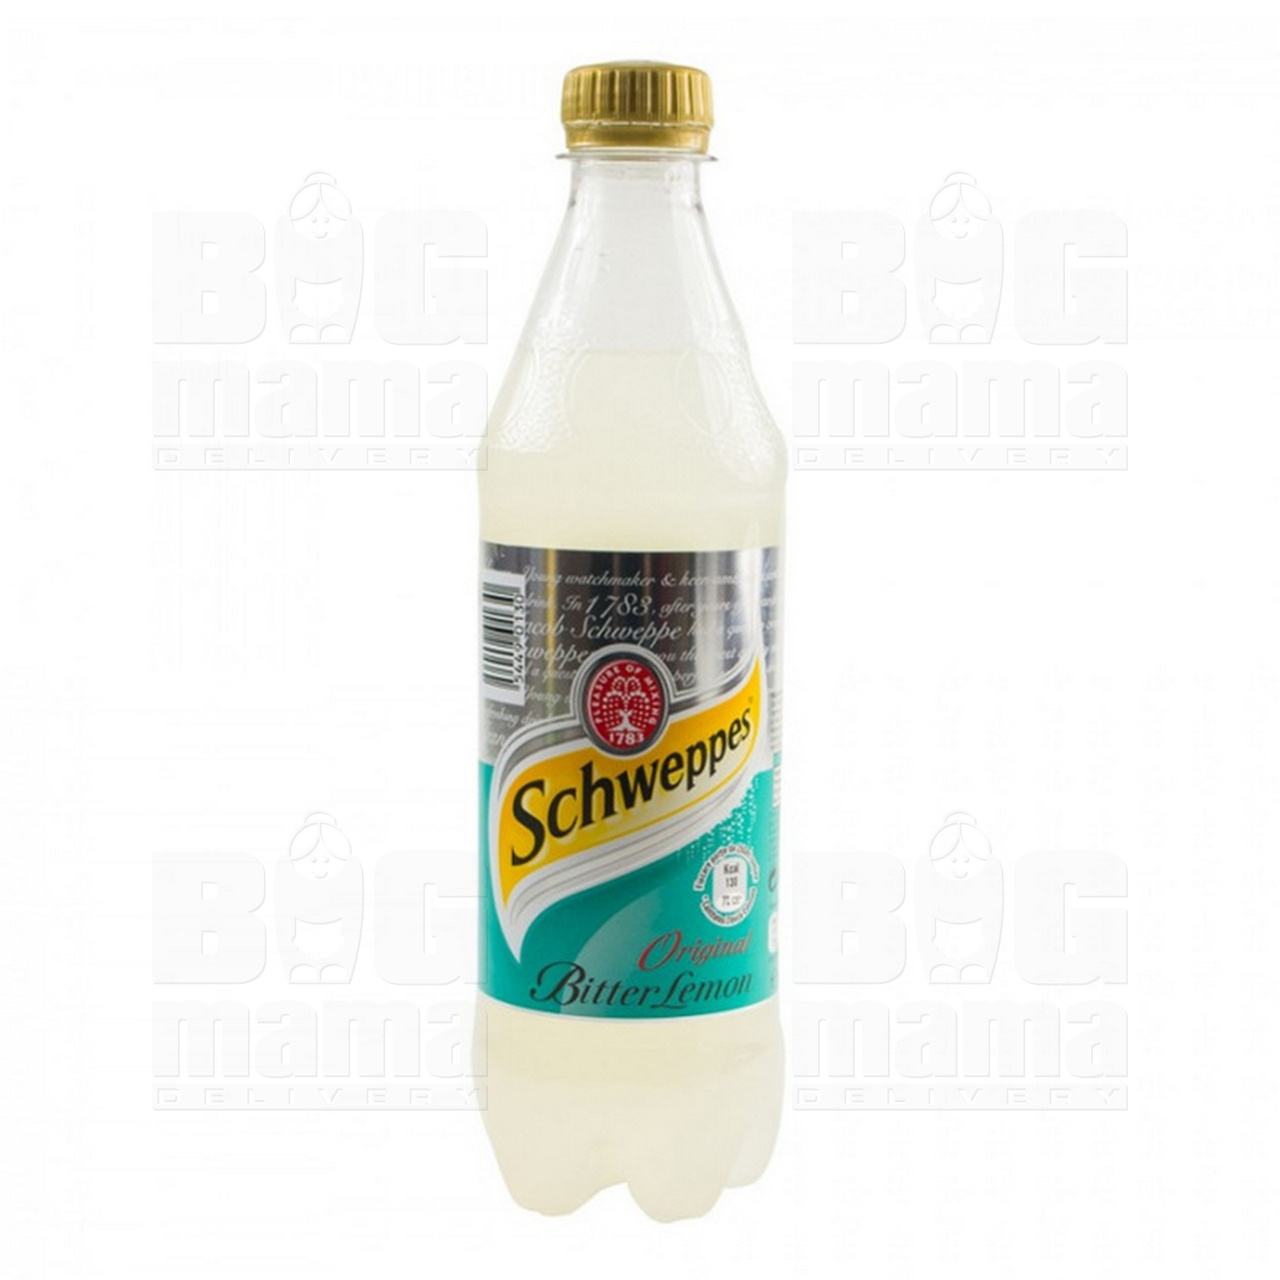 Product #236 image - Schweppes Bitter Lemon 0,5l